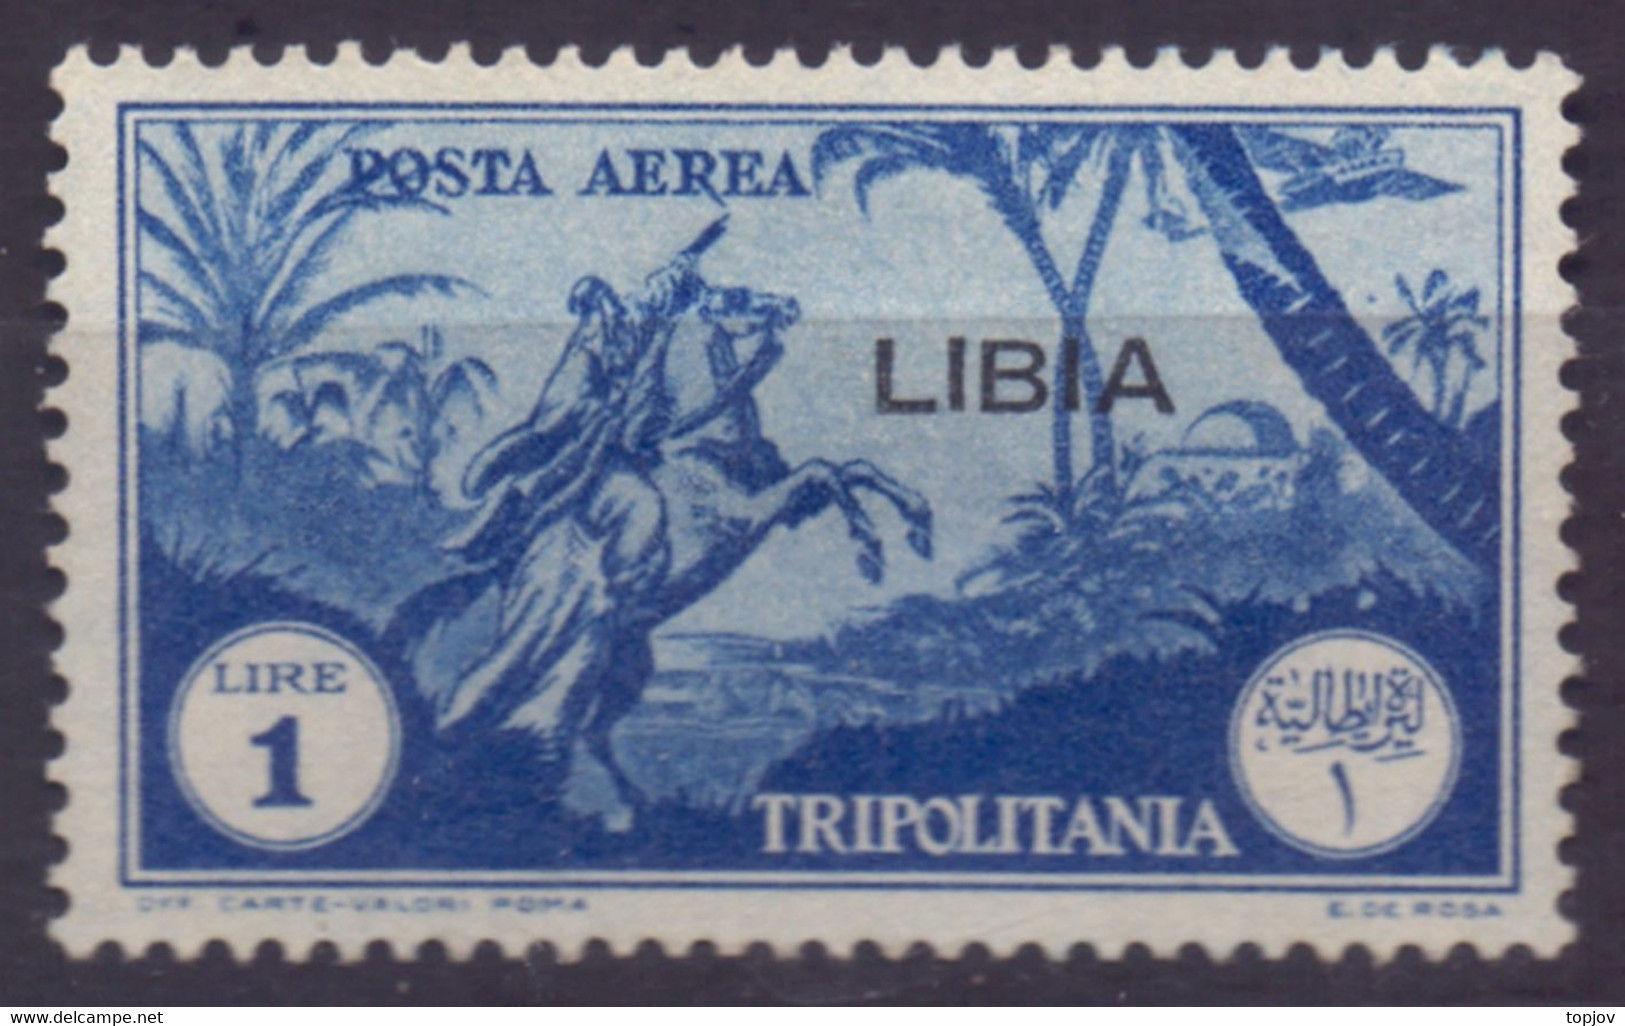 ITALIA - LIBYA - BEDUIN & HORSE- MLH - 1937 - Libia